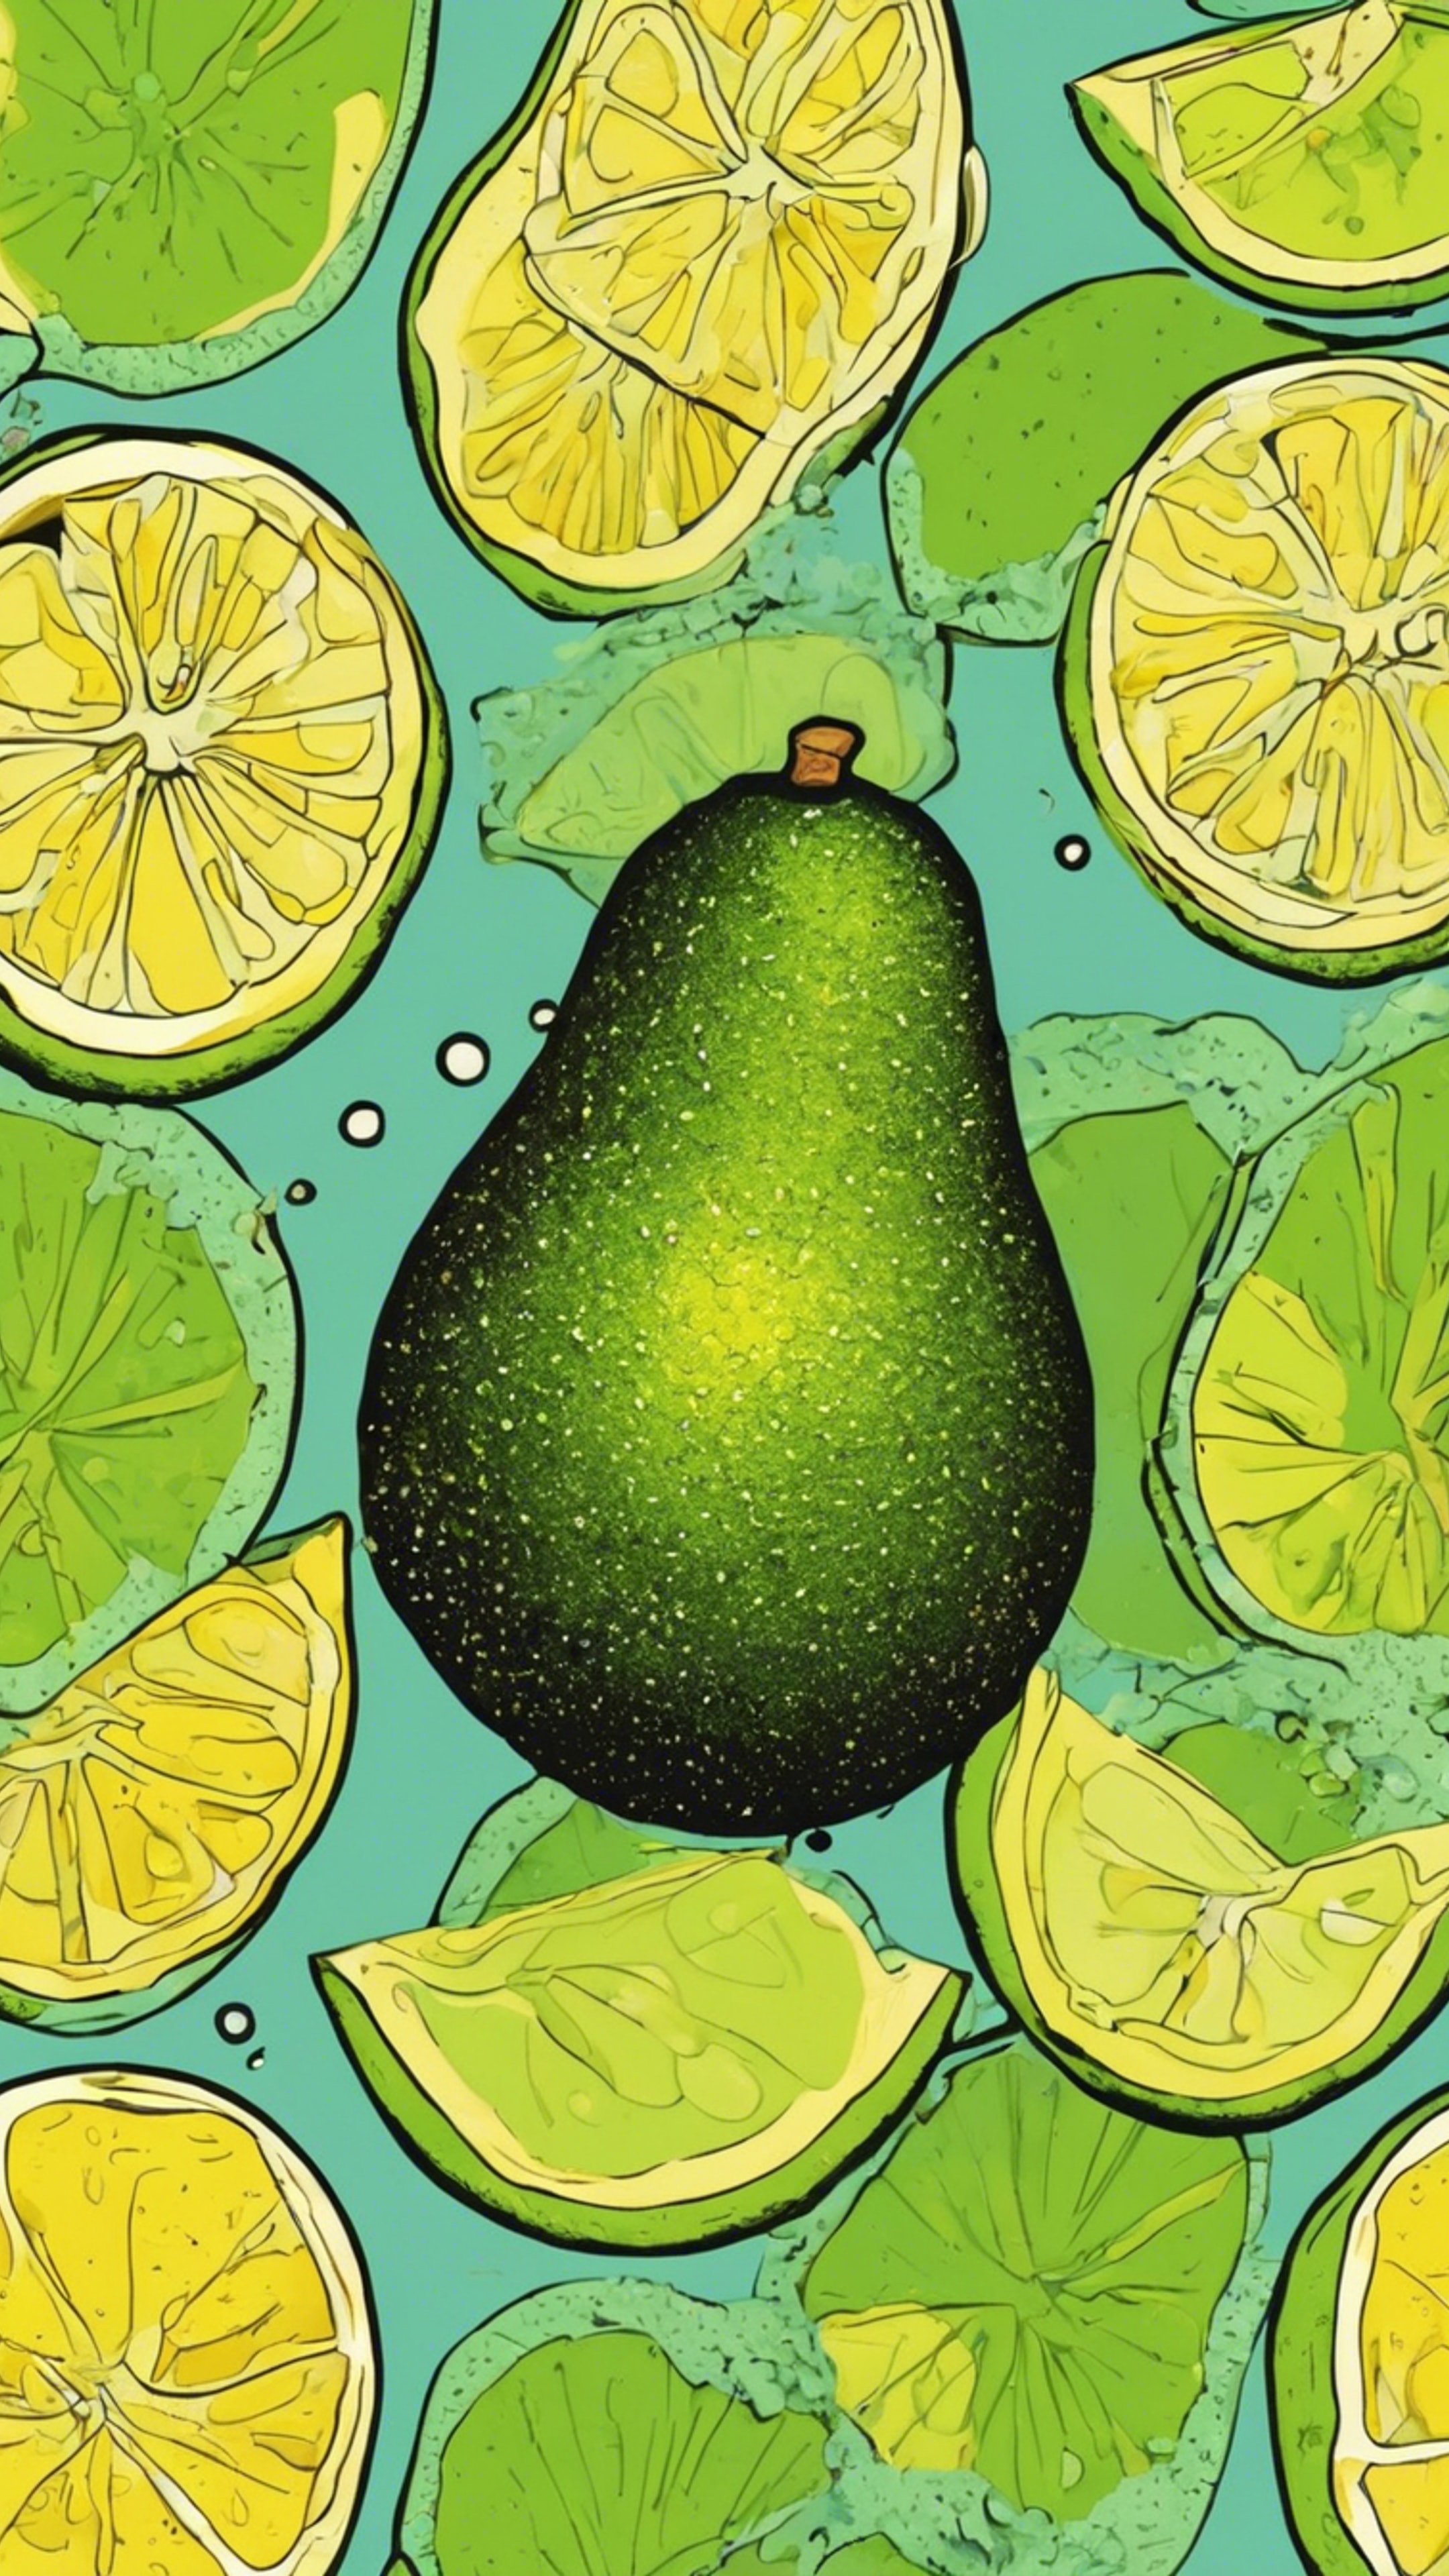 An 80's inspired pop-art style image of a sprinkling of lemon on a freshly cut avocado. Ფონი[a26b21fc8dc241dea078]